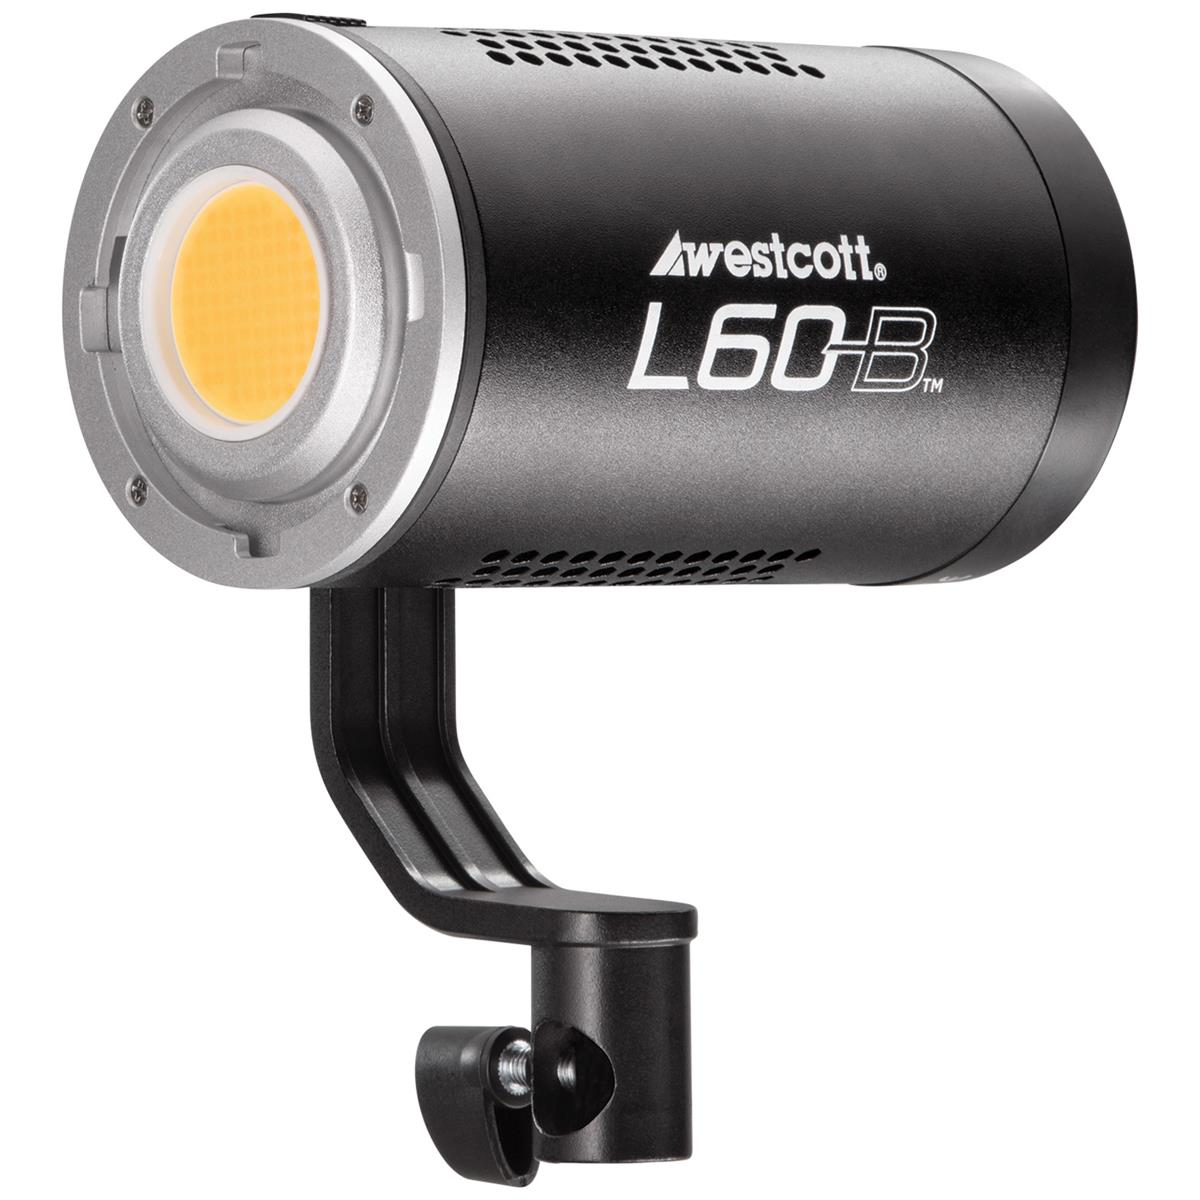 The new Wescott L60-B is the smallest 60W COB LED